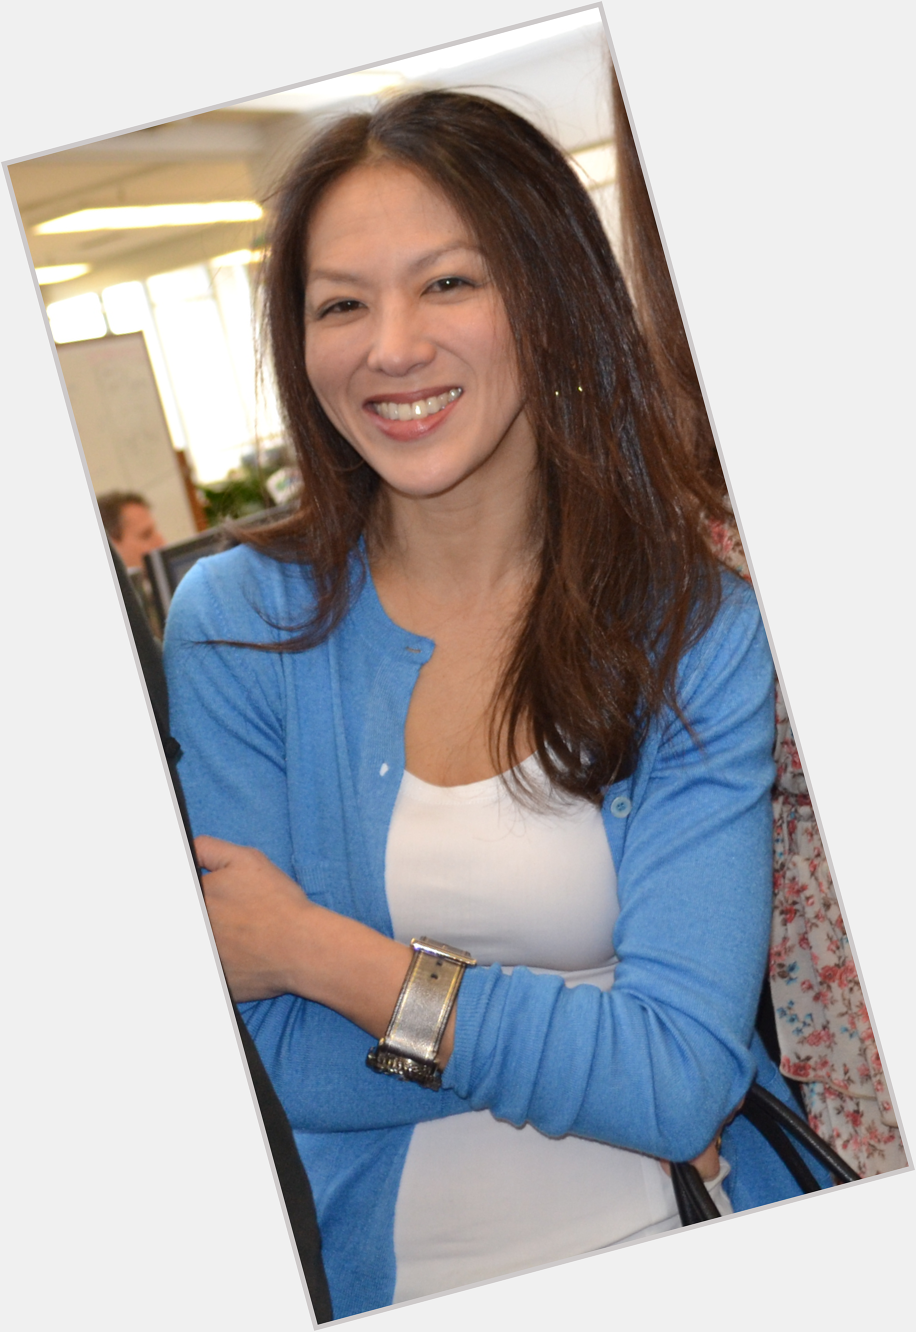 Happy birthday Amy Chua! American lawyer, writer, and legal scholar  